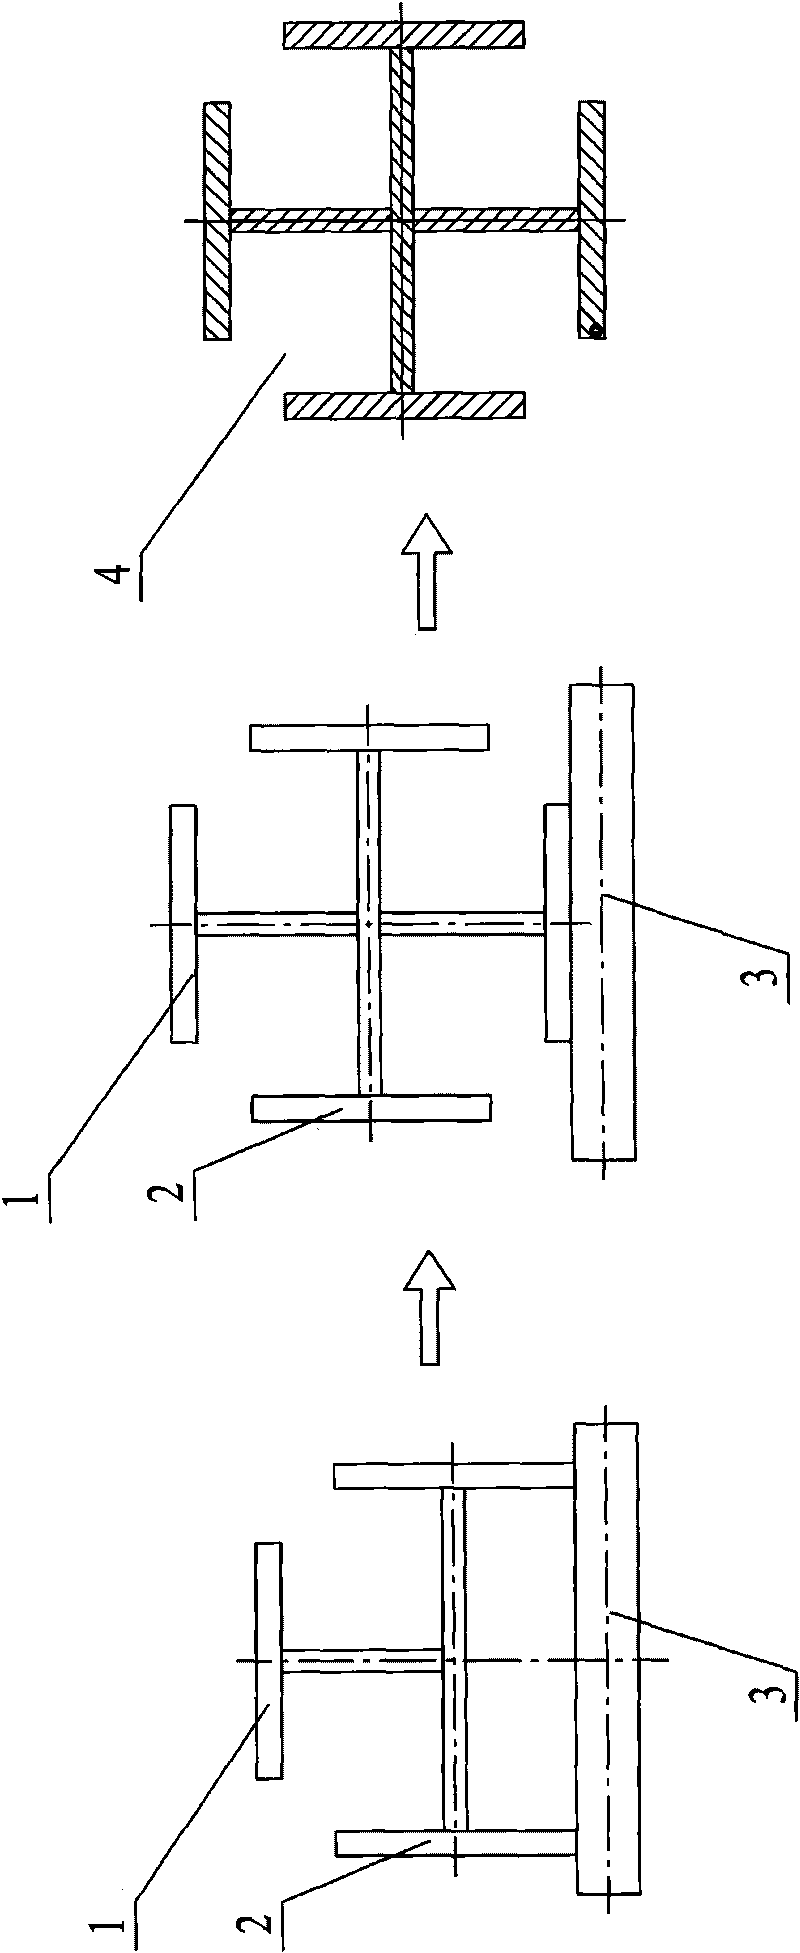 Crossed column assembling machine